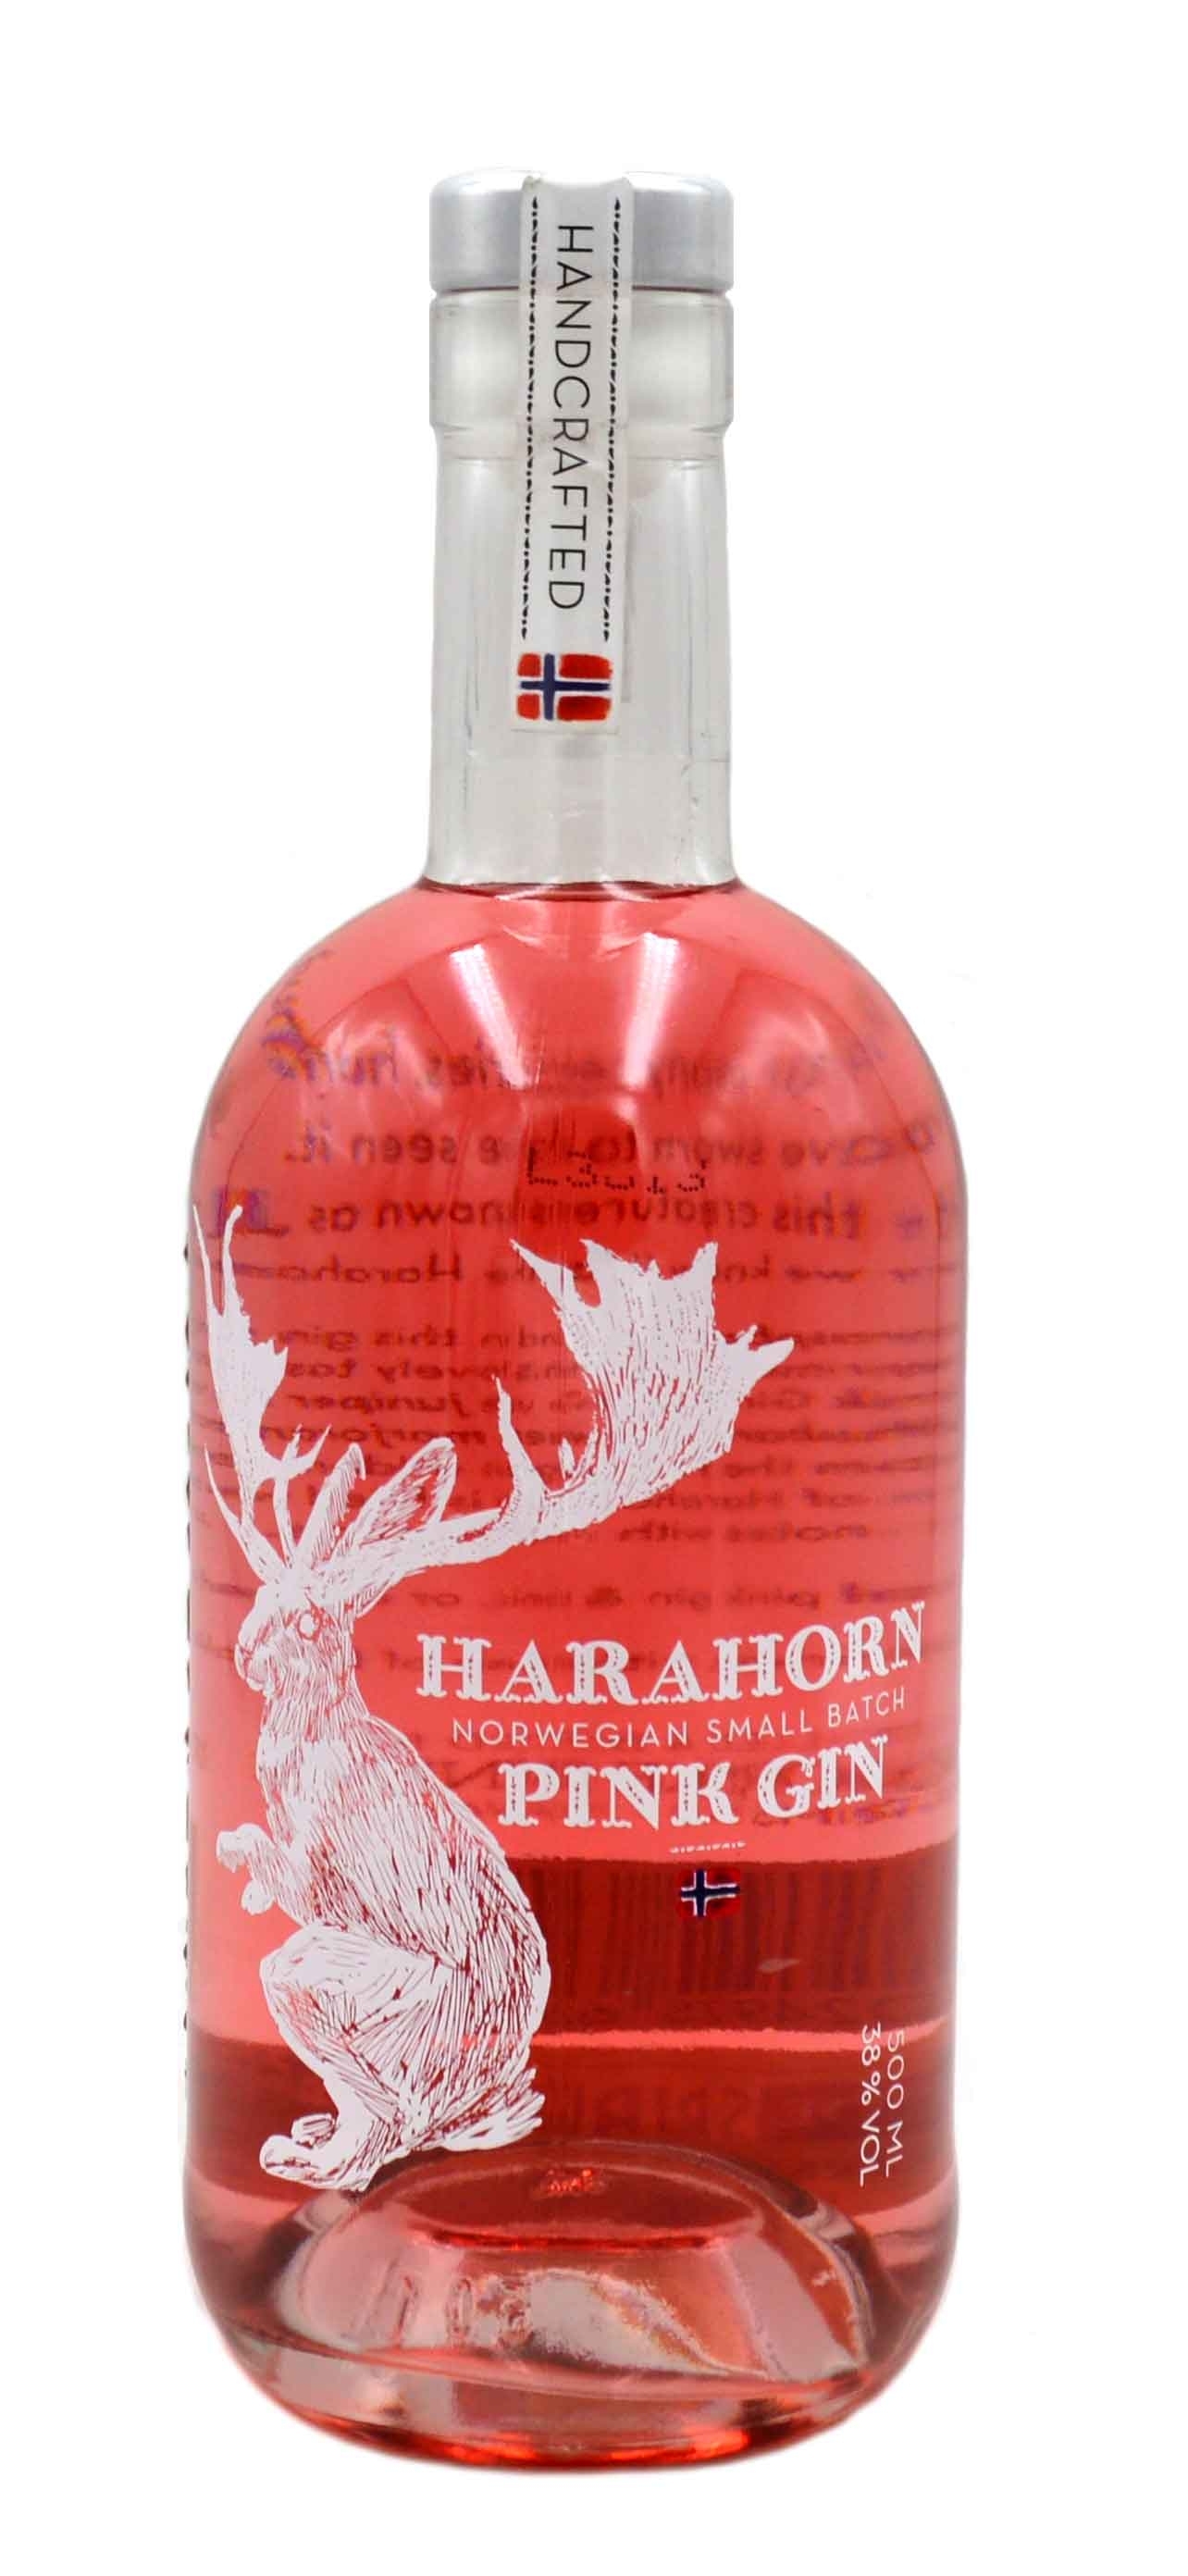 Harahorn Norwegian Small Batch Pink Gin | Gin